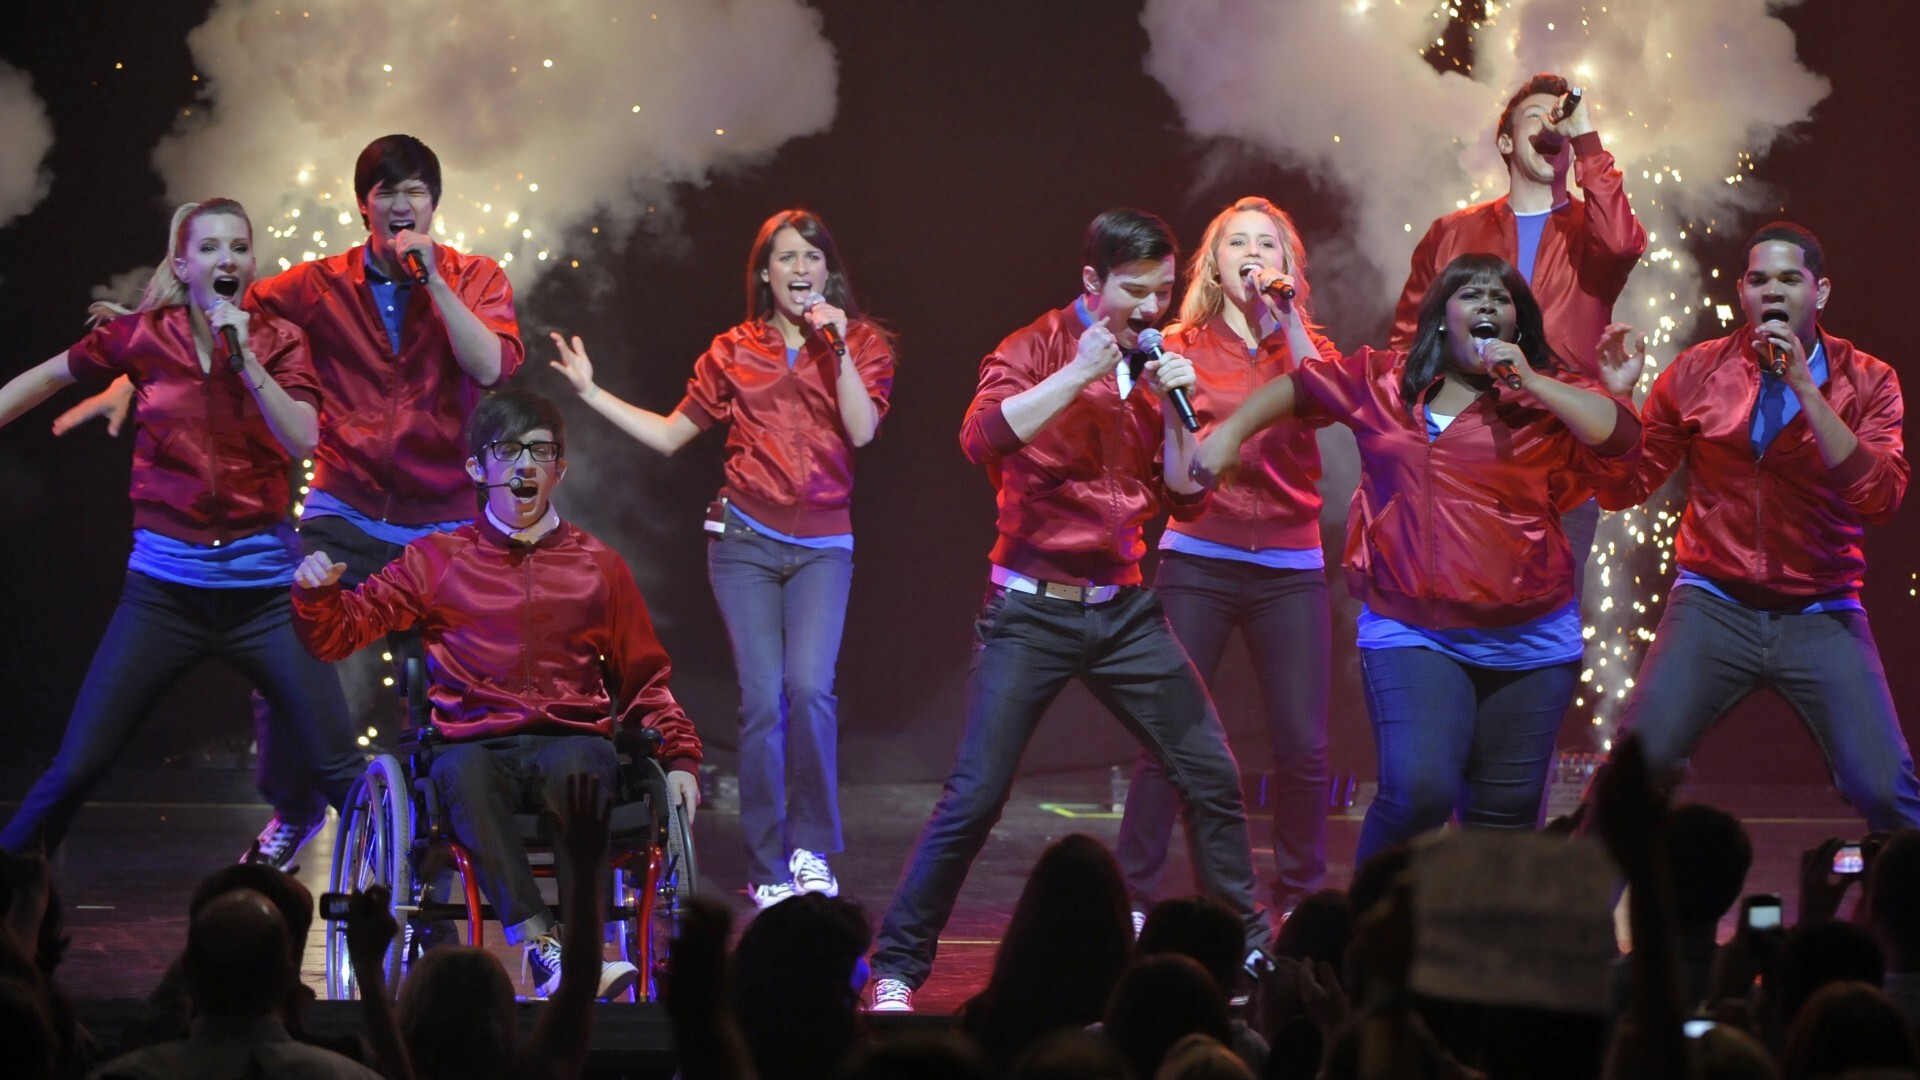 Glee (TV series): A musical comedy-drama show created by Ryan Murphy, Brad Falchuk, and Ian Brennan. 1920x1080 Full HD Background.